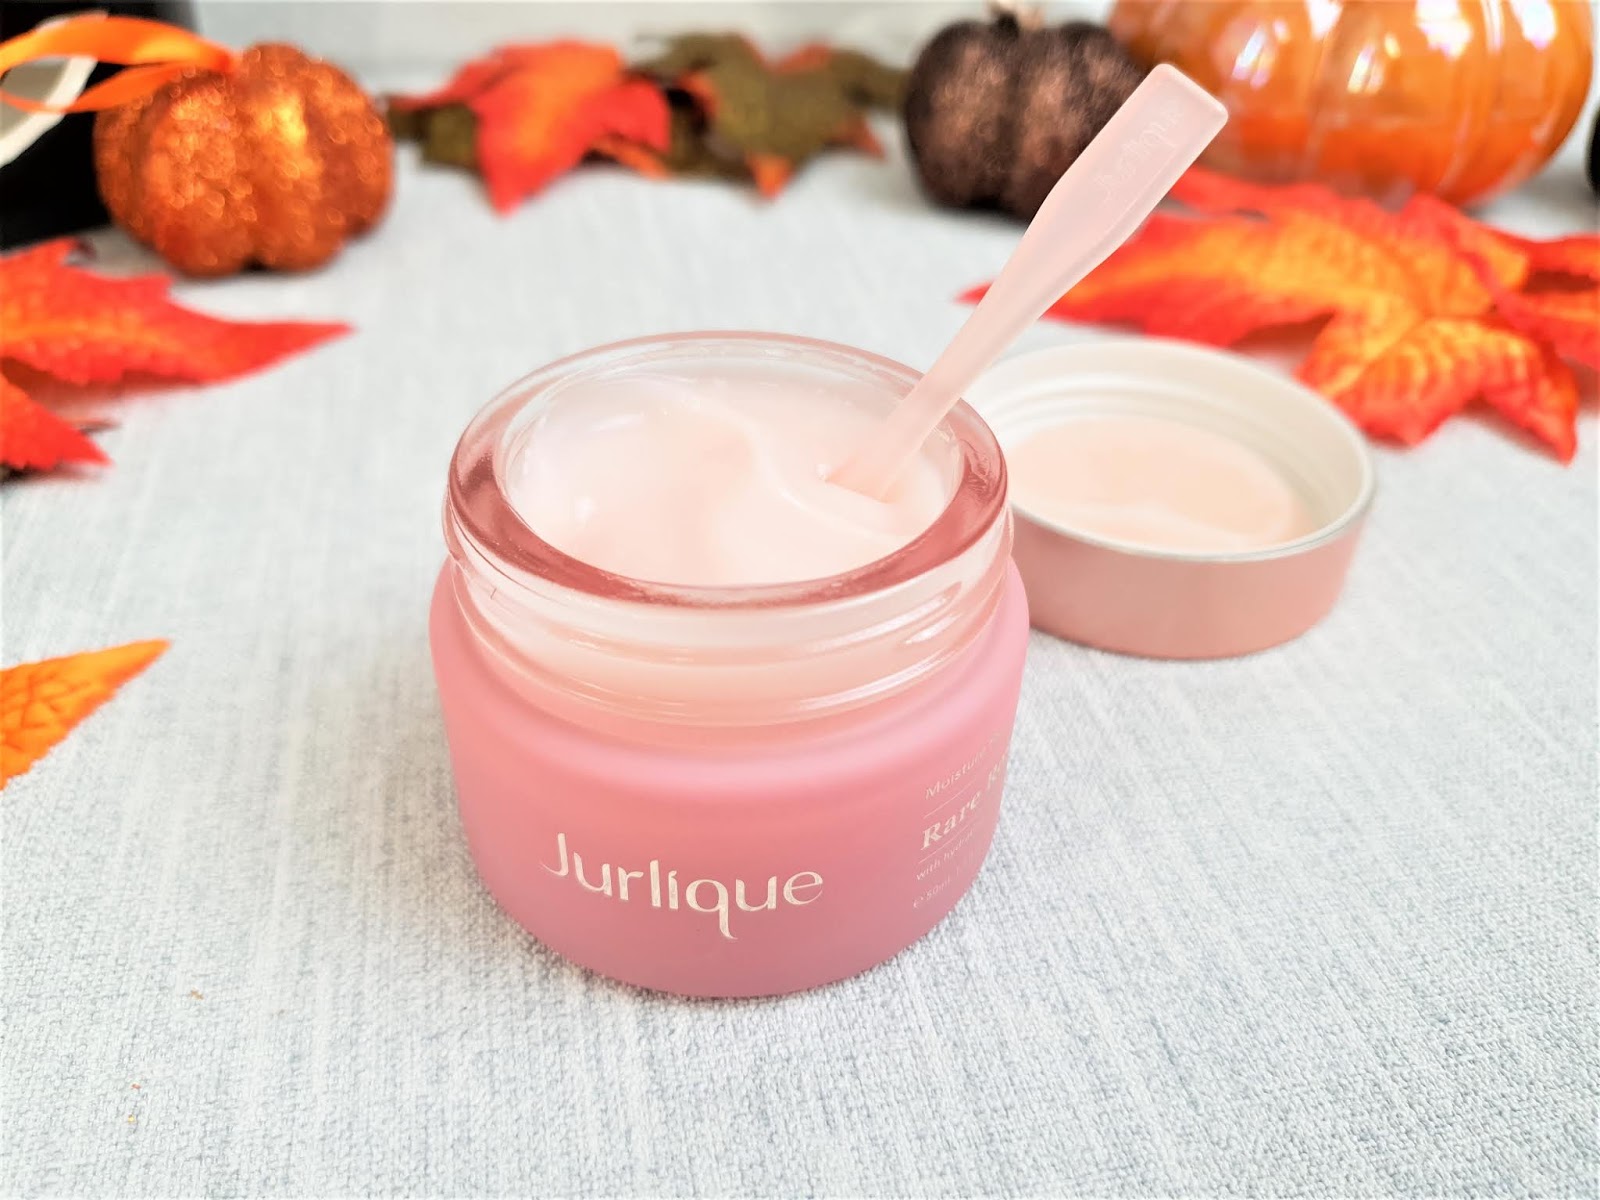 Jurlique Moisture Plus Rare Rose Skincare Review | Loves